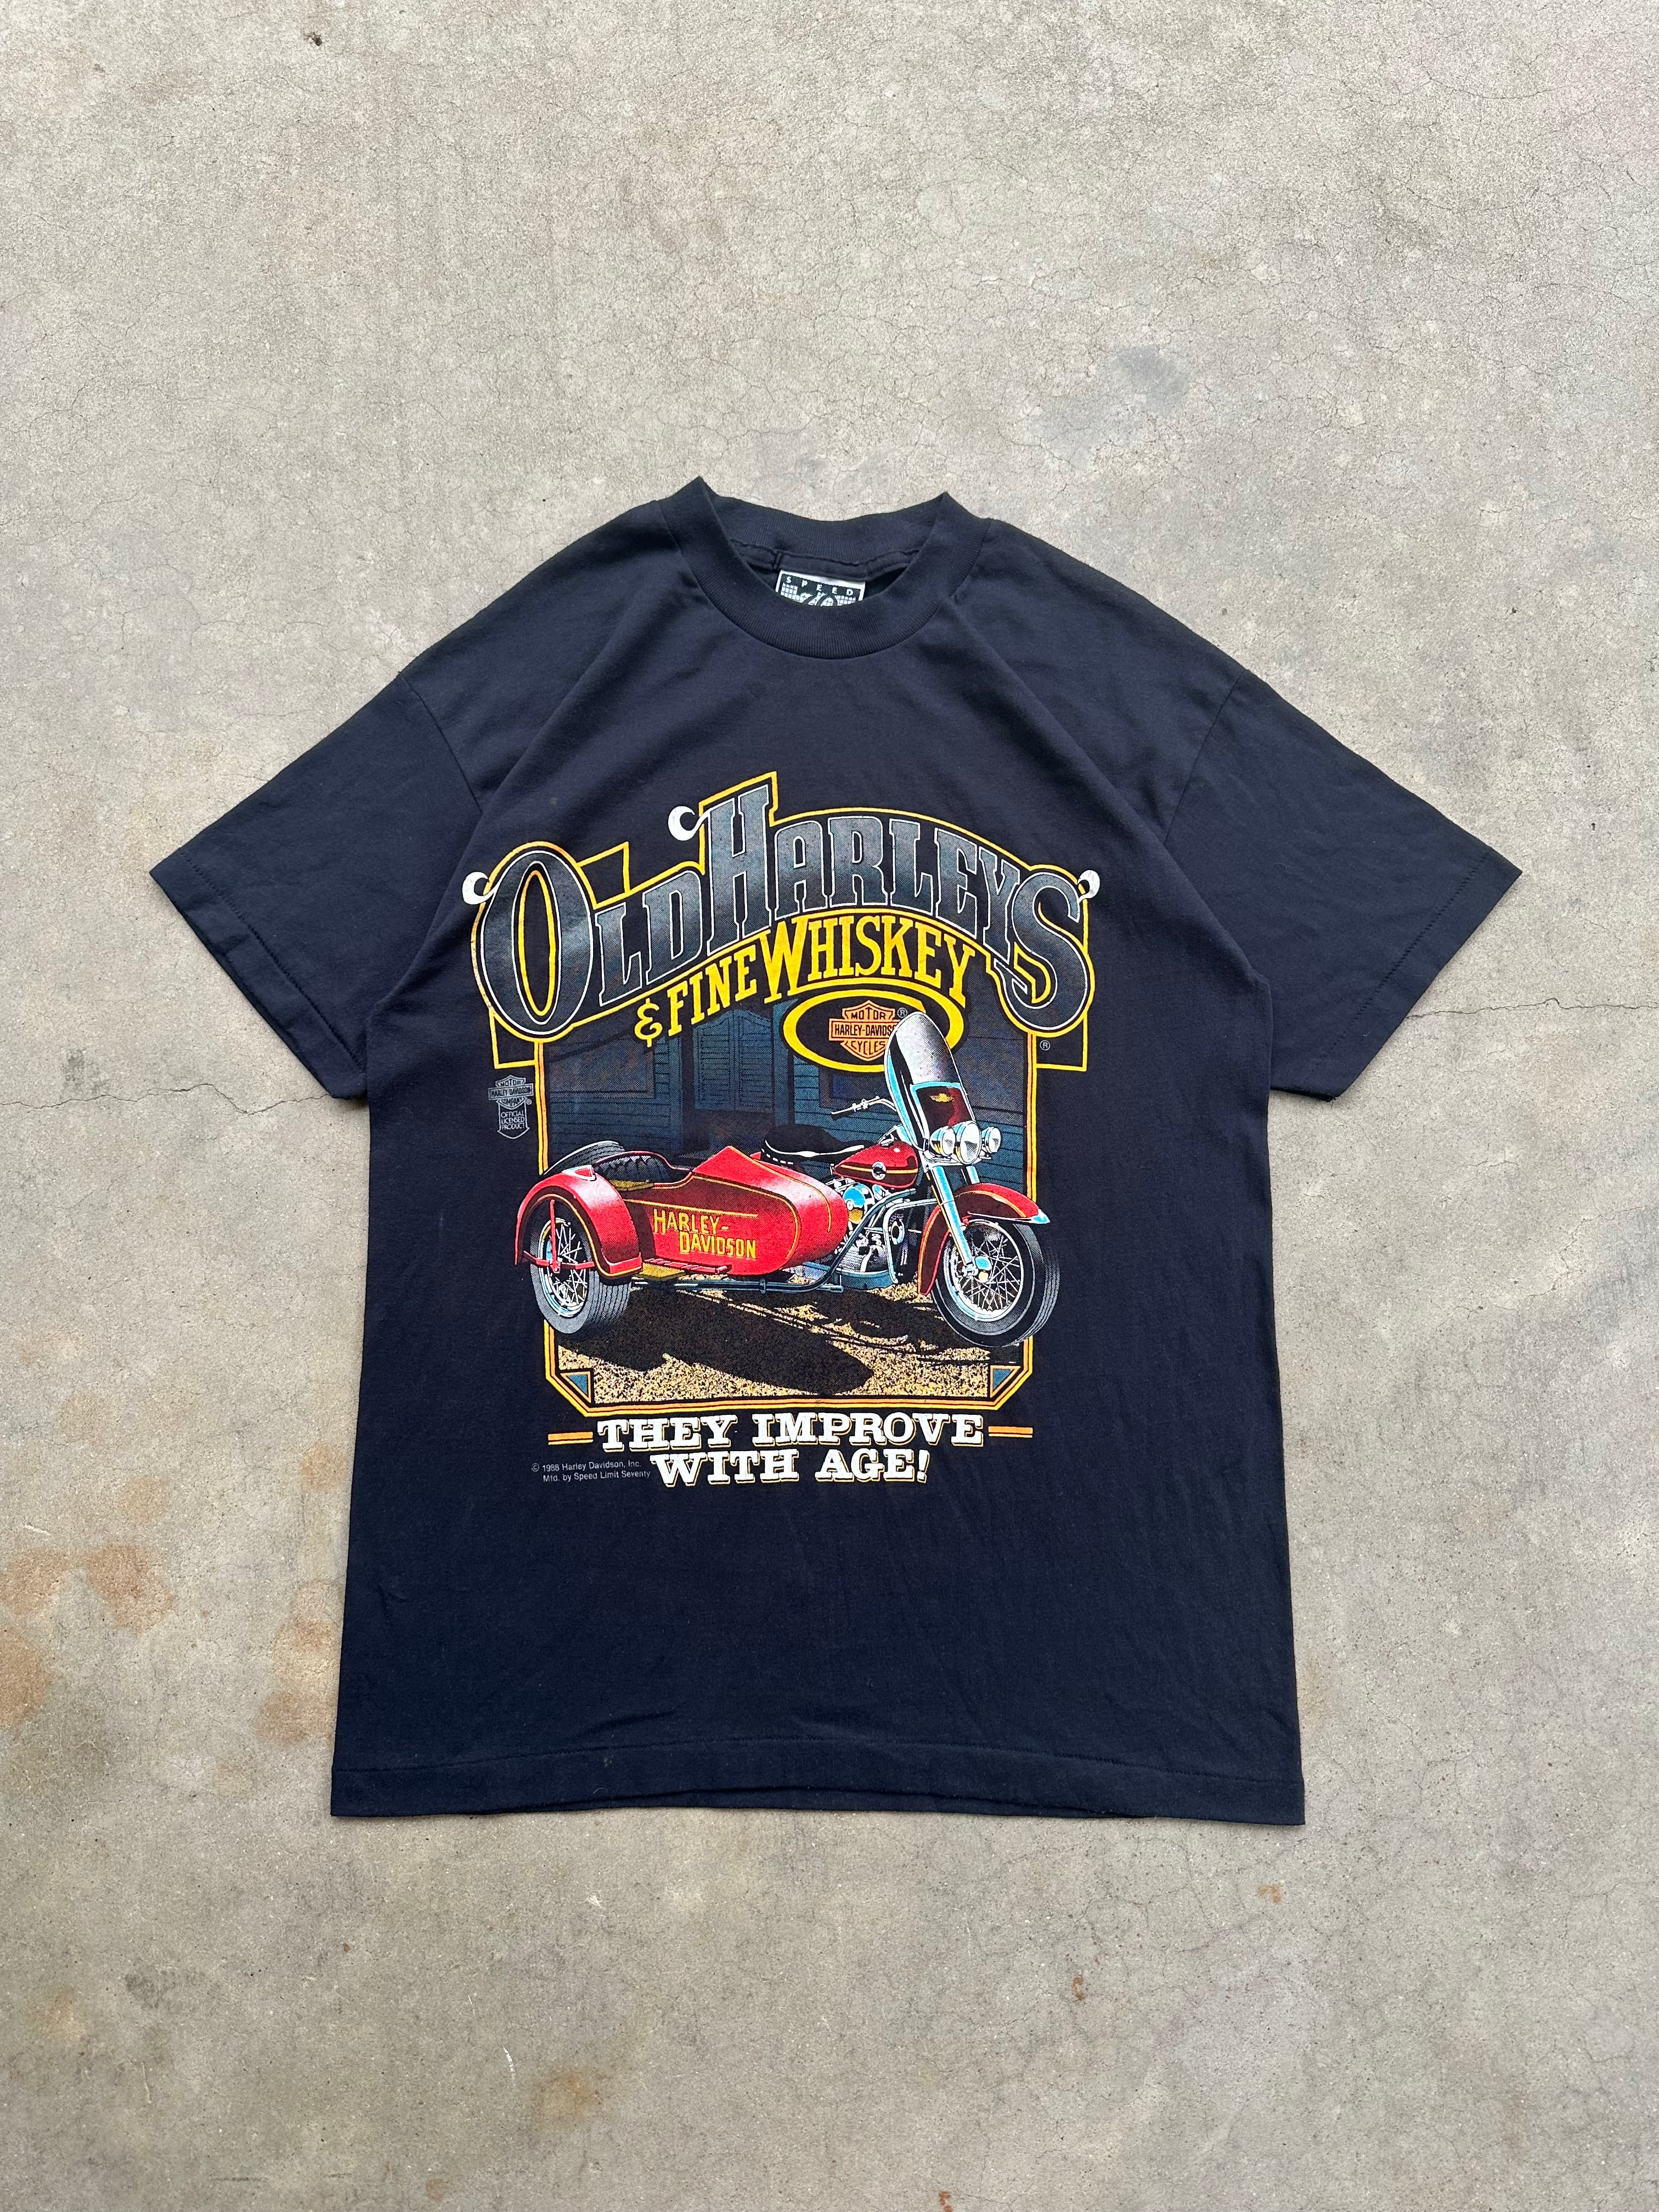 1988 Harley Davidson Old Harley’s & Fine Whiskey T-Shirt (M)